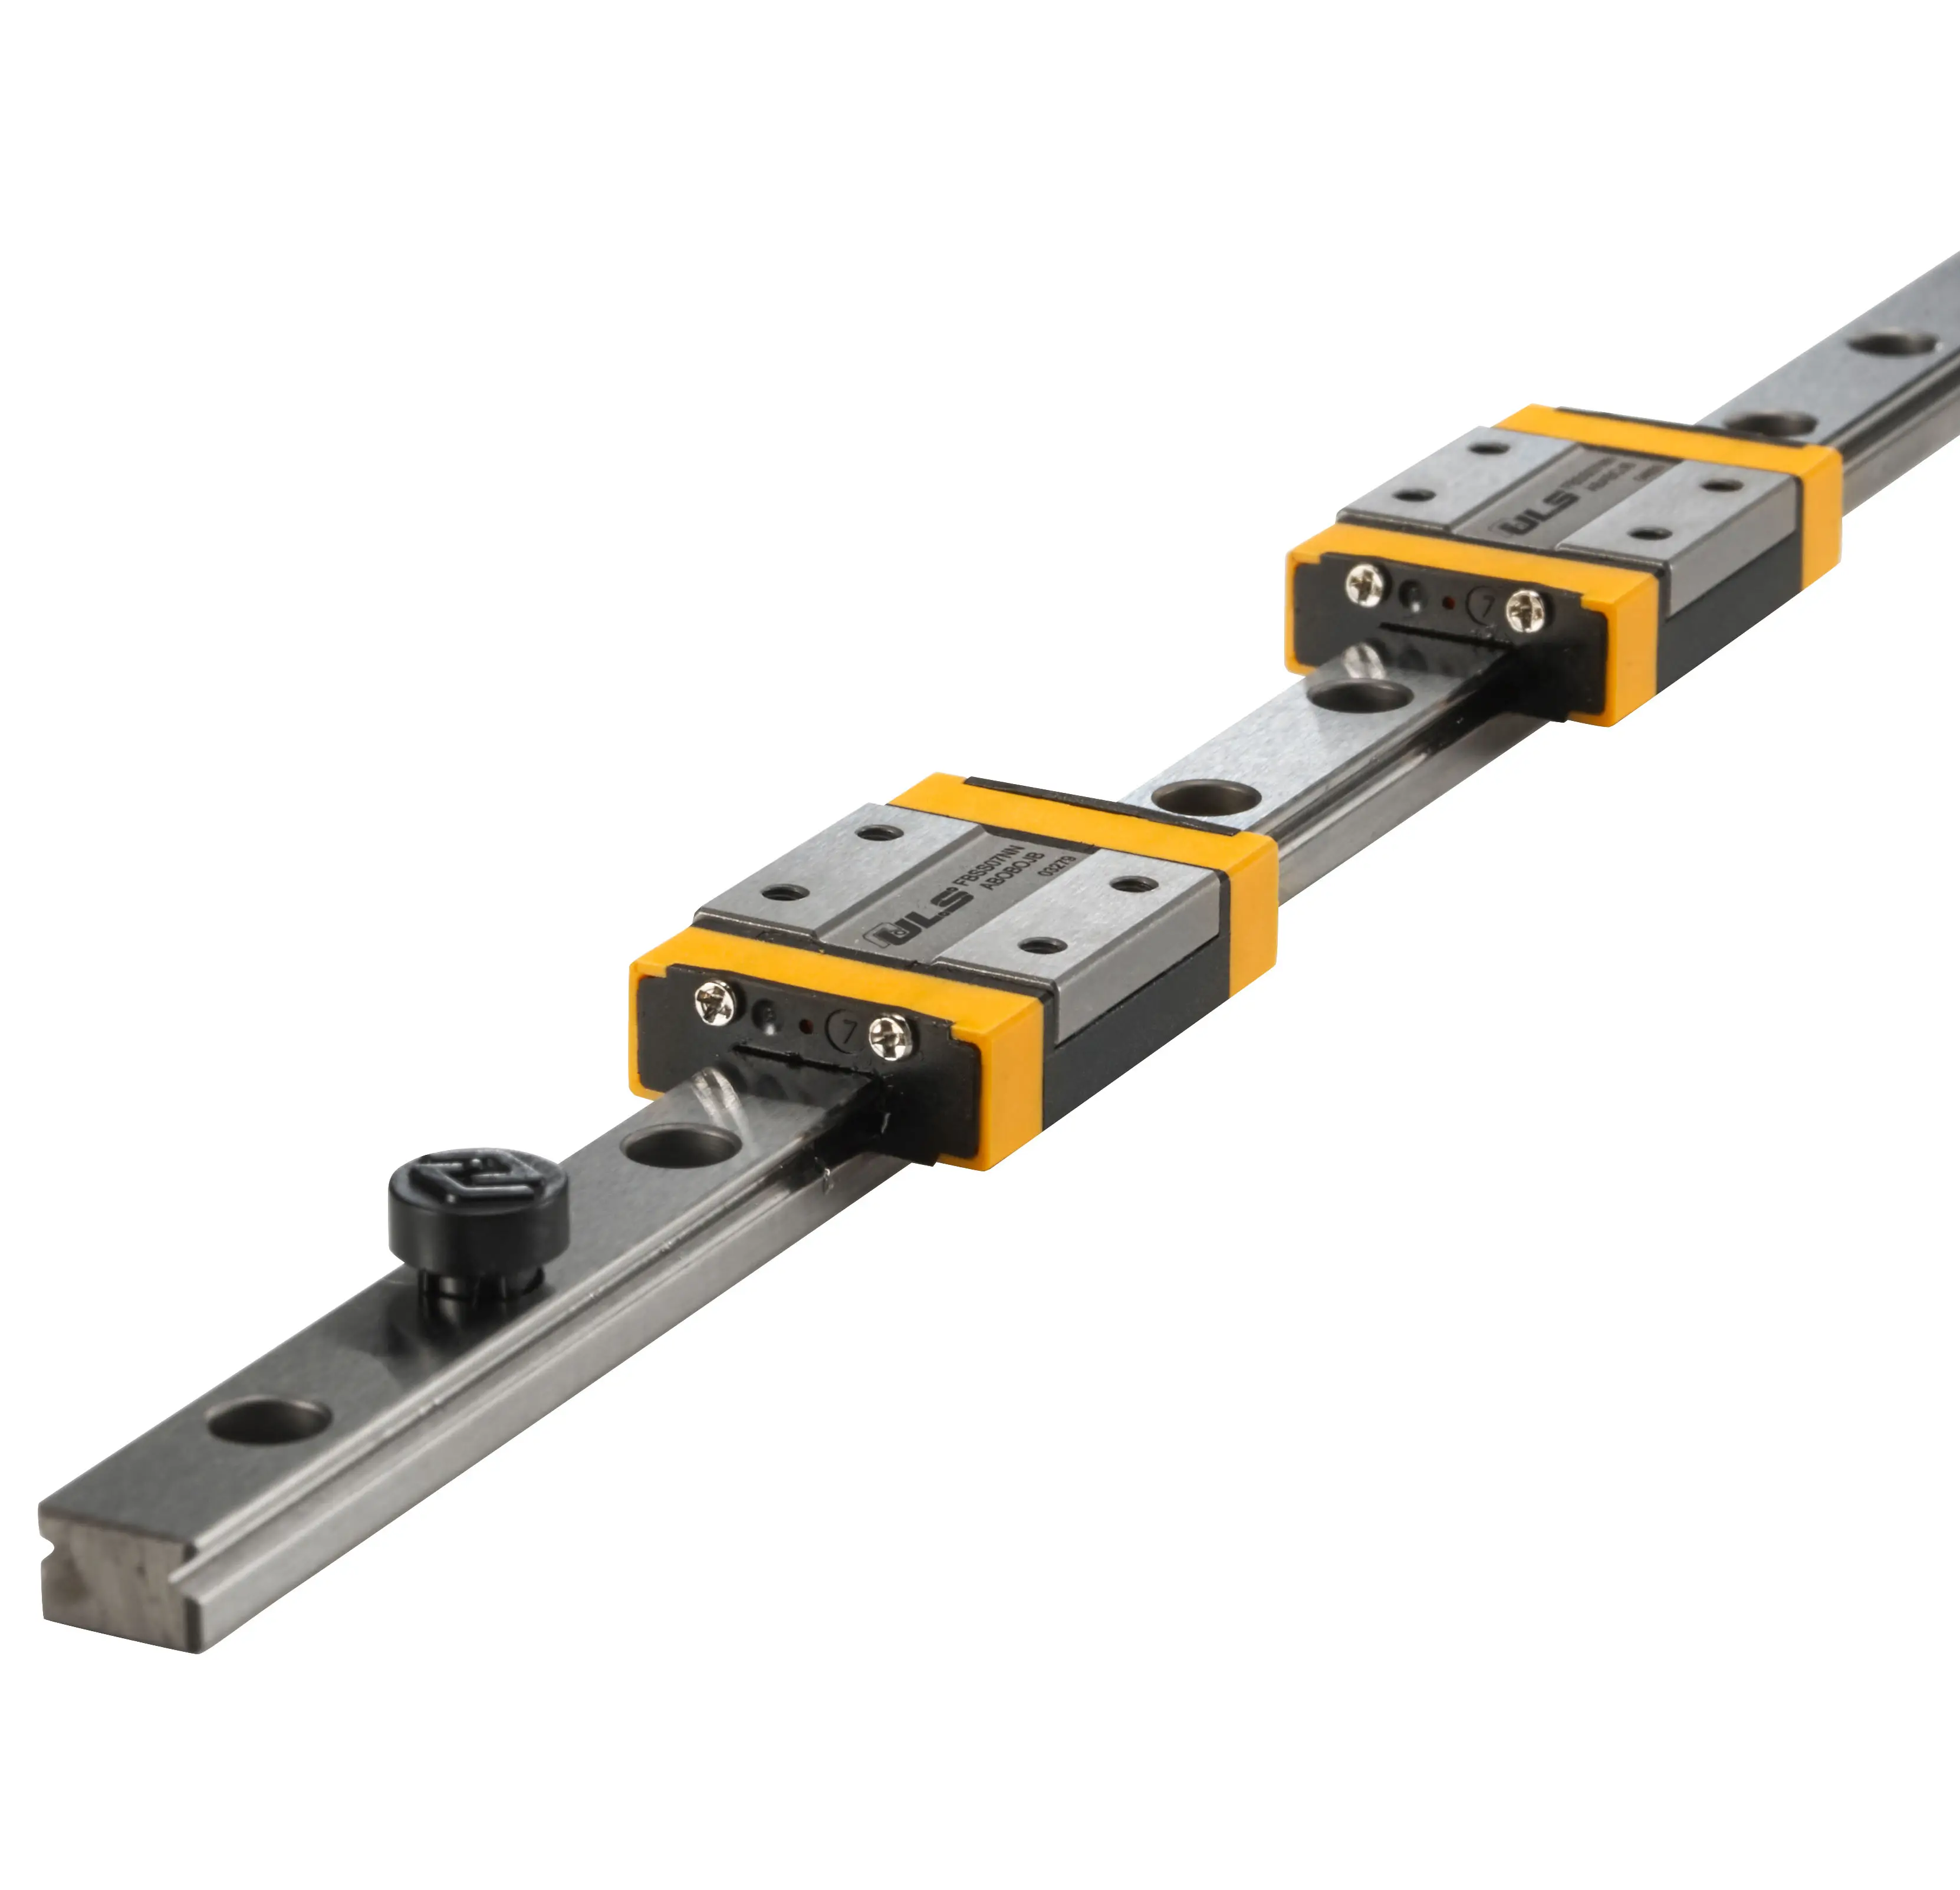 Hot sale economical custom design cross aluminium linear guide rail system linear slide rail